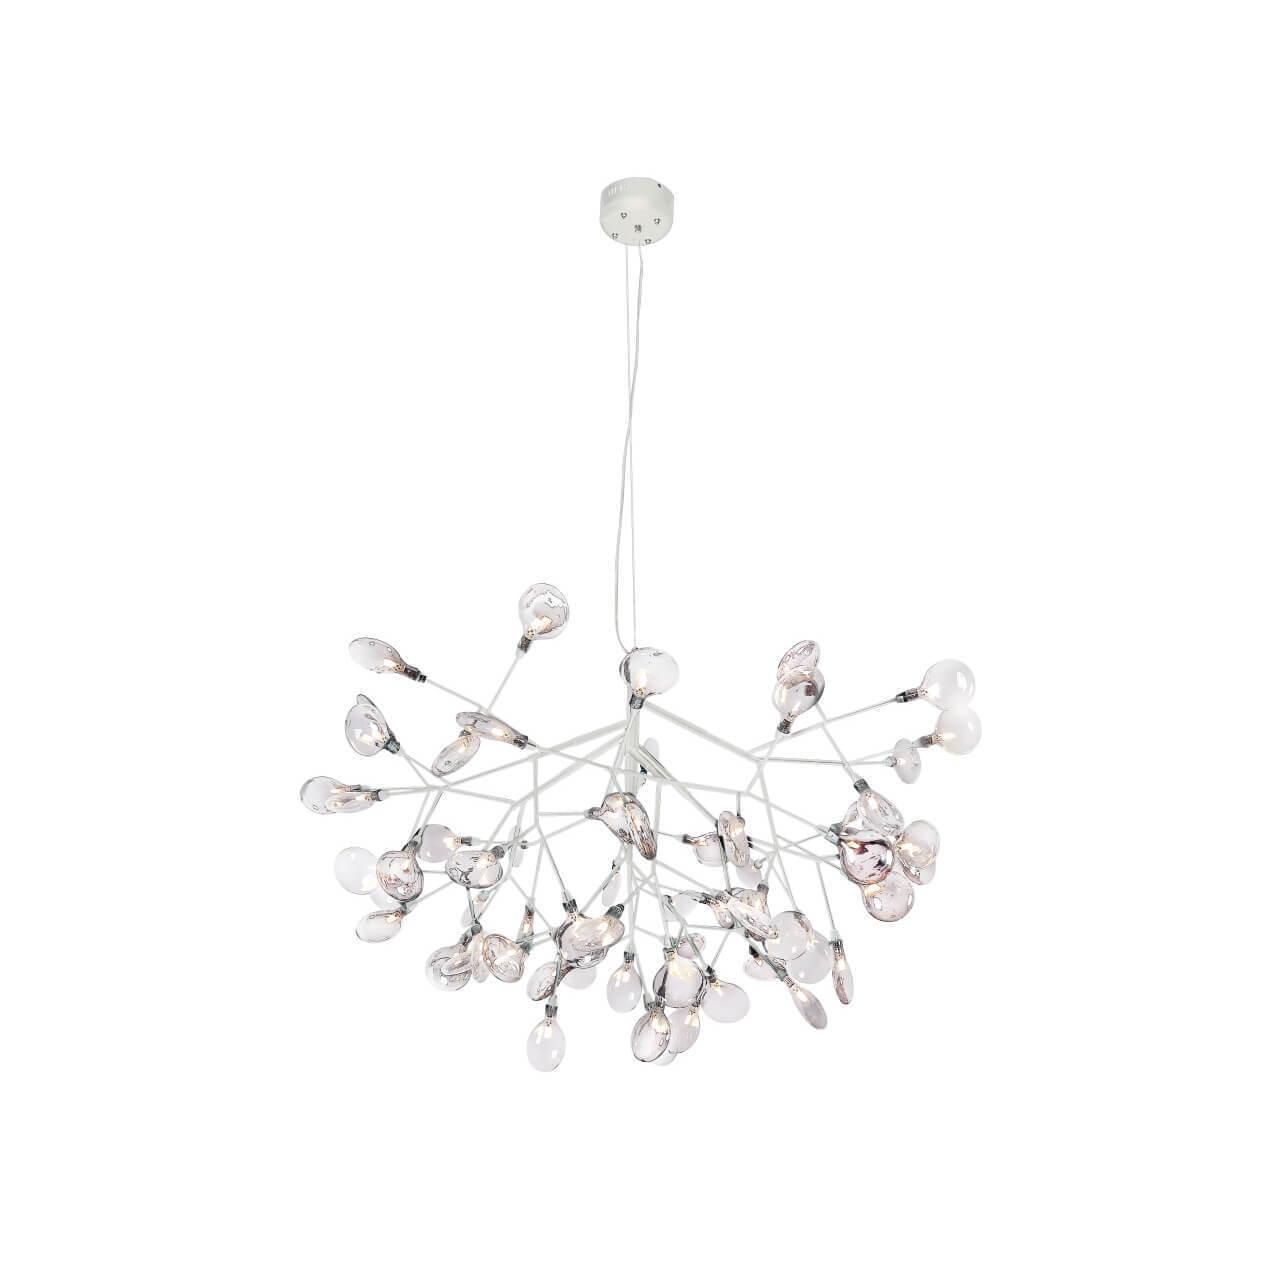 Подвесная светодиодная люстра Crystal Lux Evita SP63 White/Transparent подвесная люстра crystal lux nicolas sp pl8 gold white